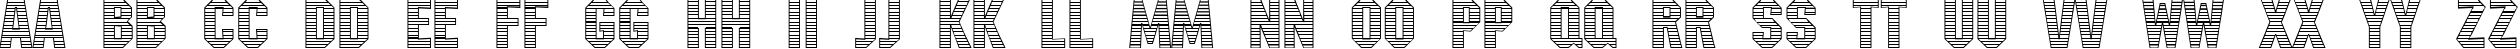 Пример написания английского алфавита шрифтом a_MachinaNovaStrMini